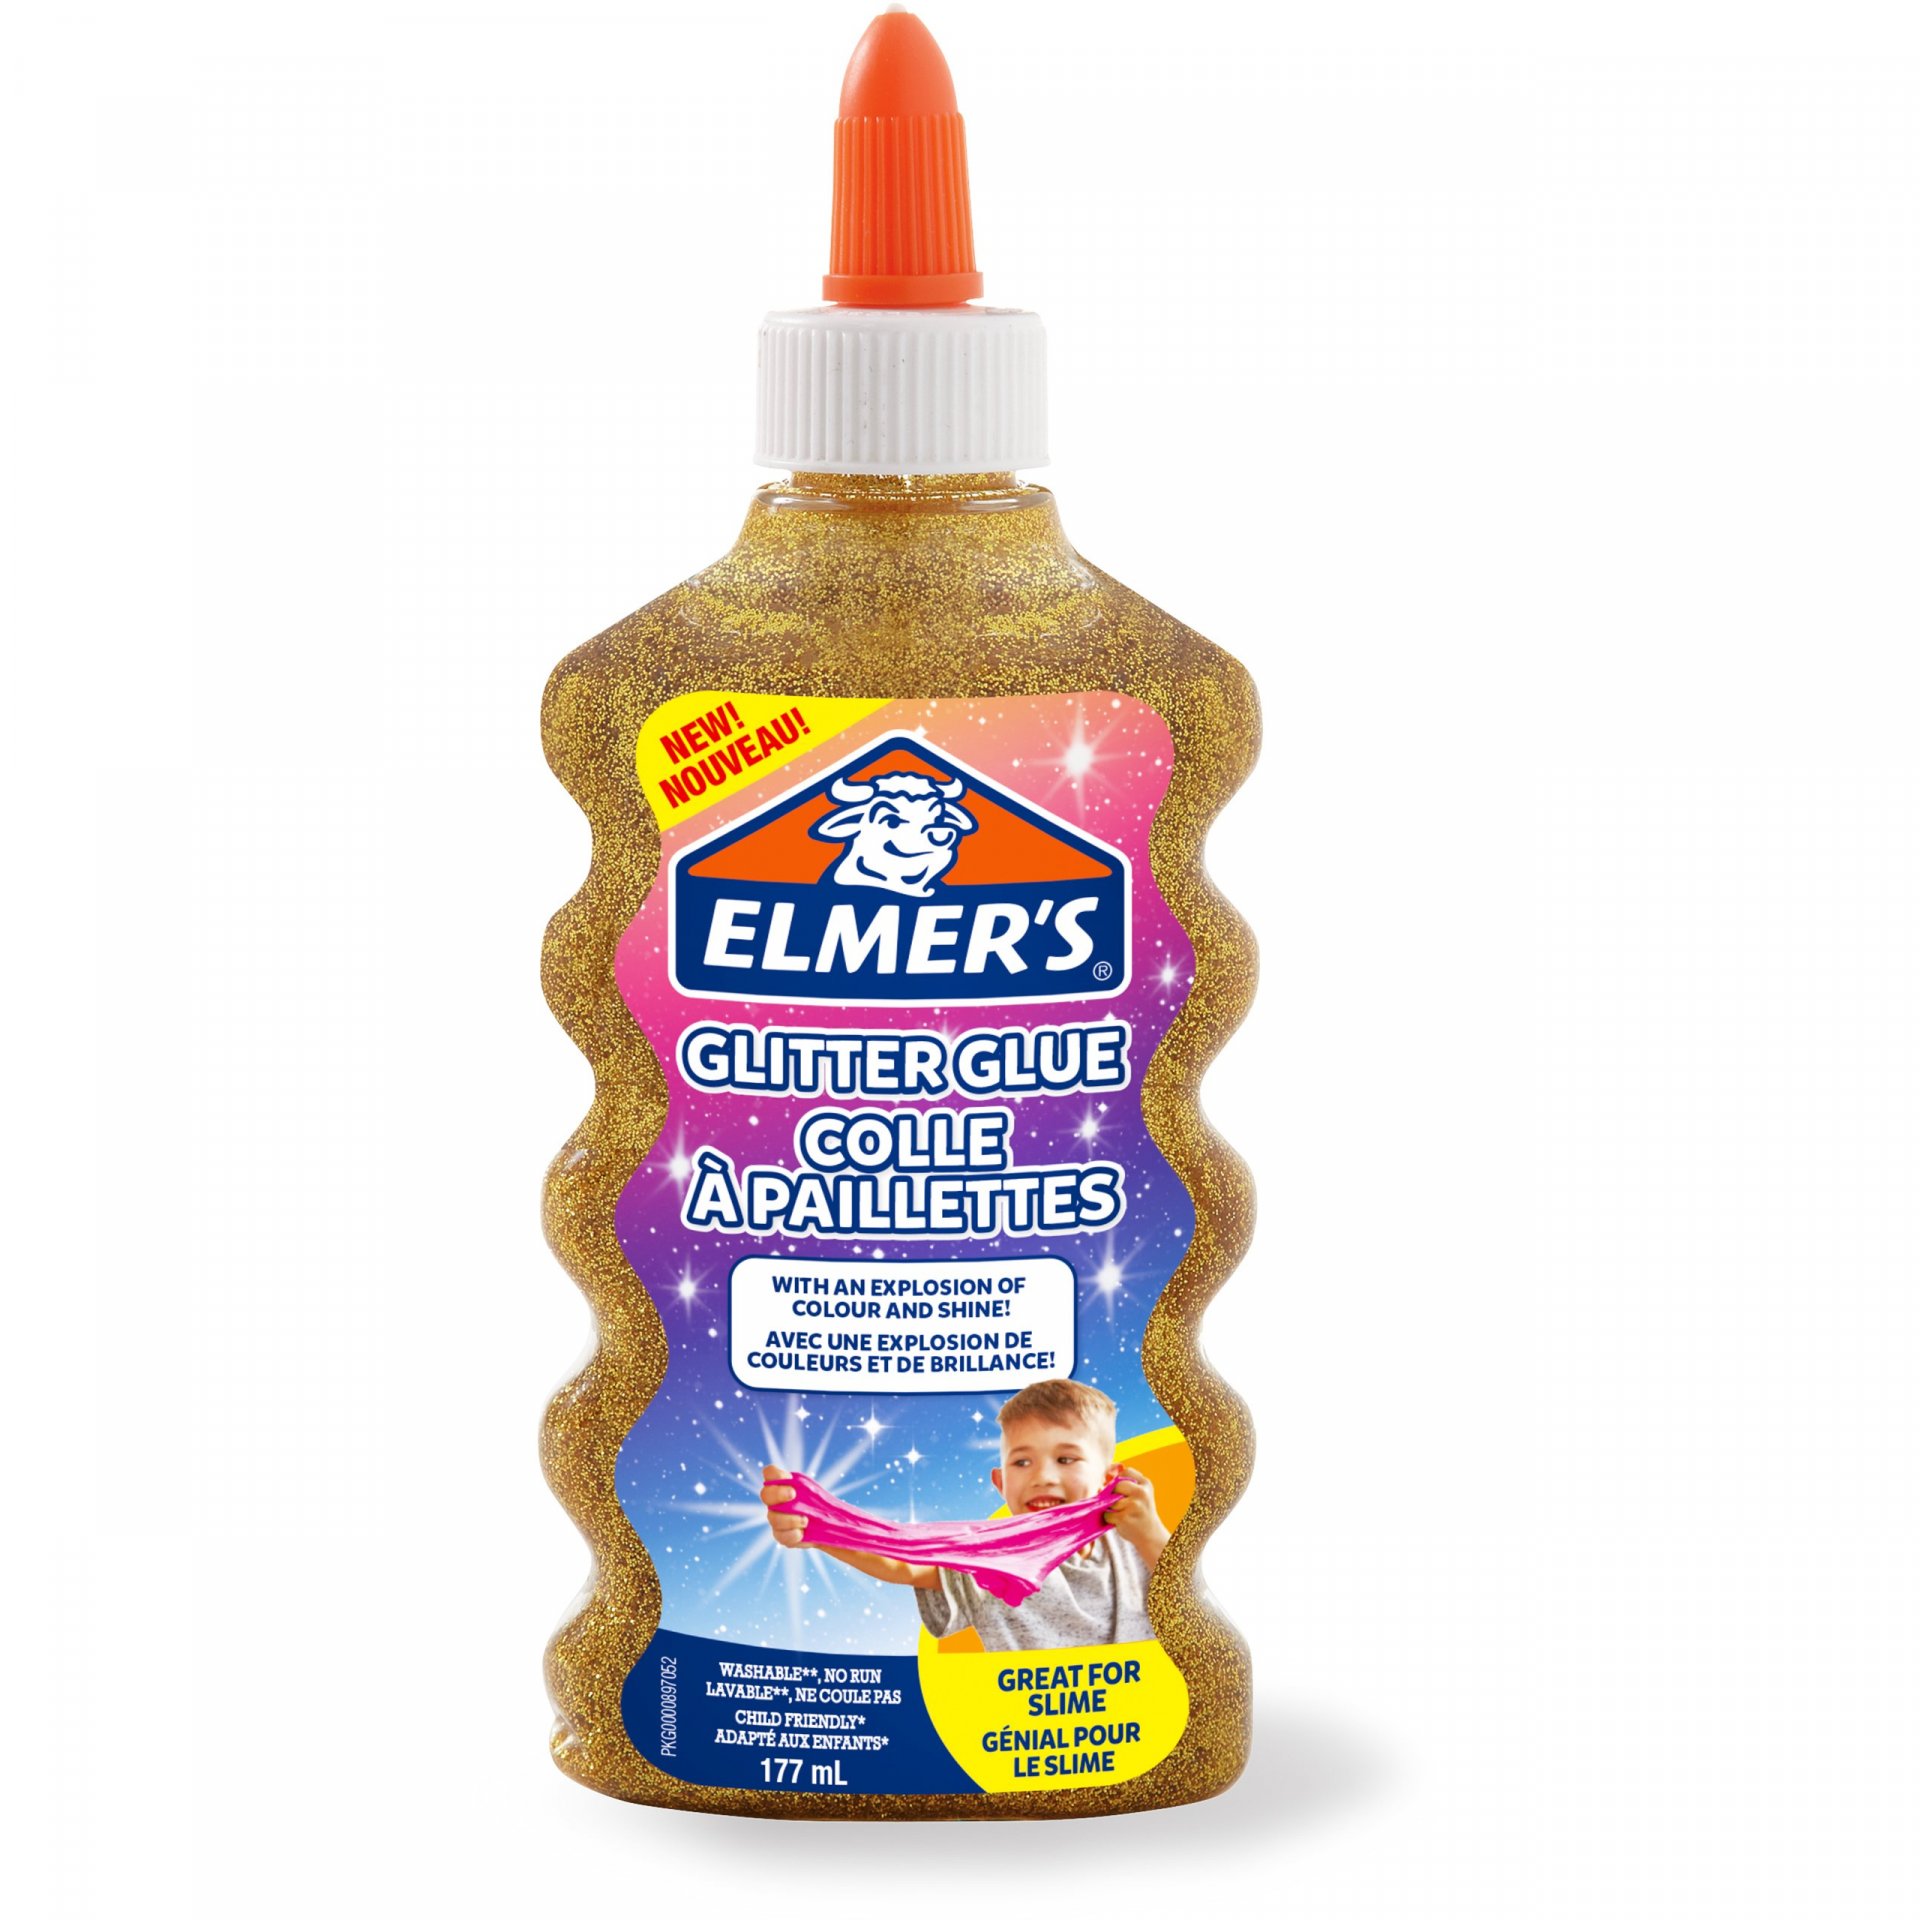 Buy Elmers glitter glue online at Modulor Online Shop